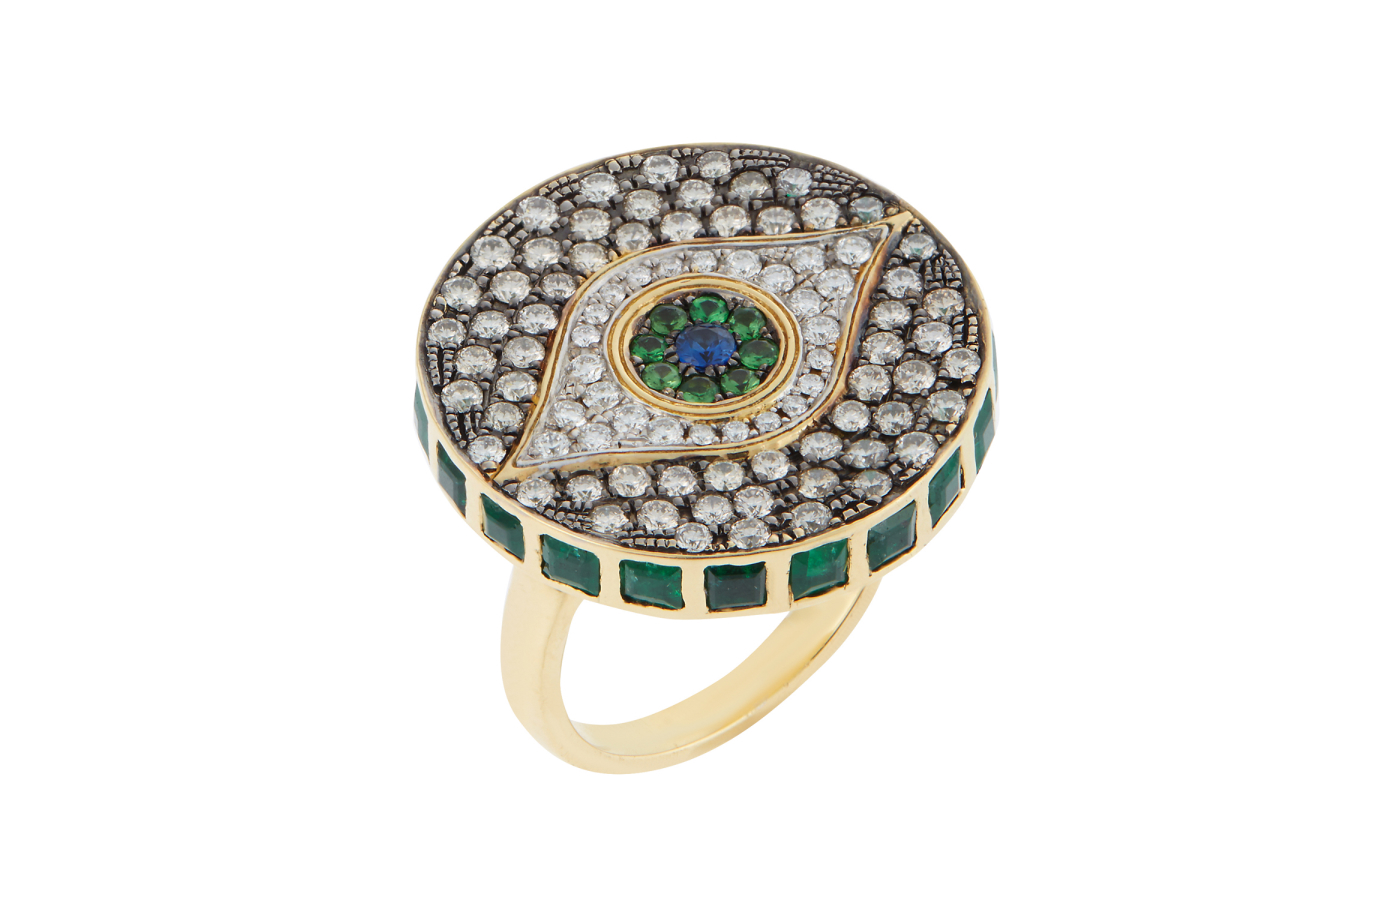 Ileana Makri Dawn Candy ring in gold, tsavorite, sapphire, emerald, champagne and white diamonds